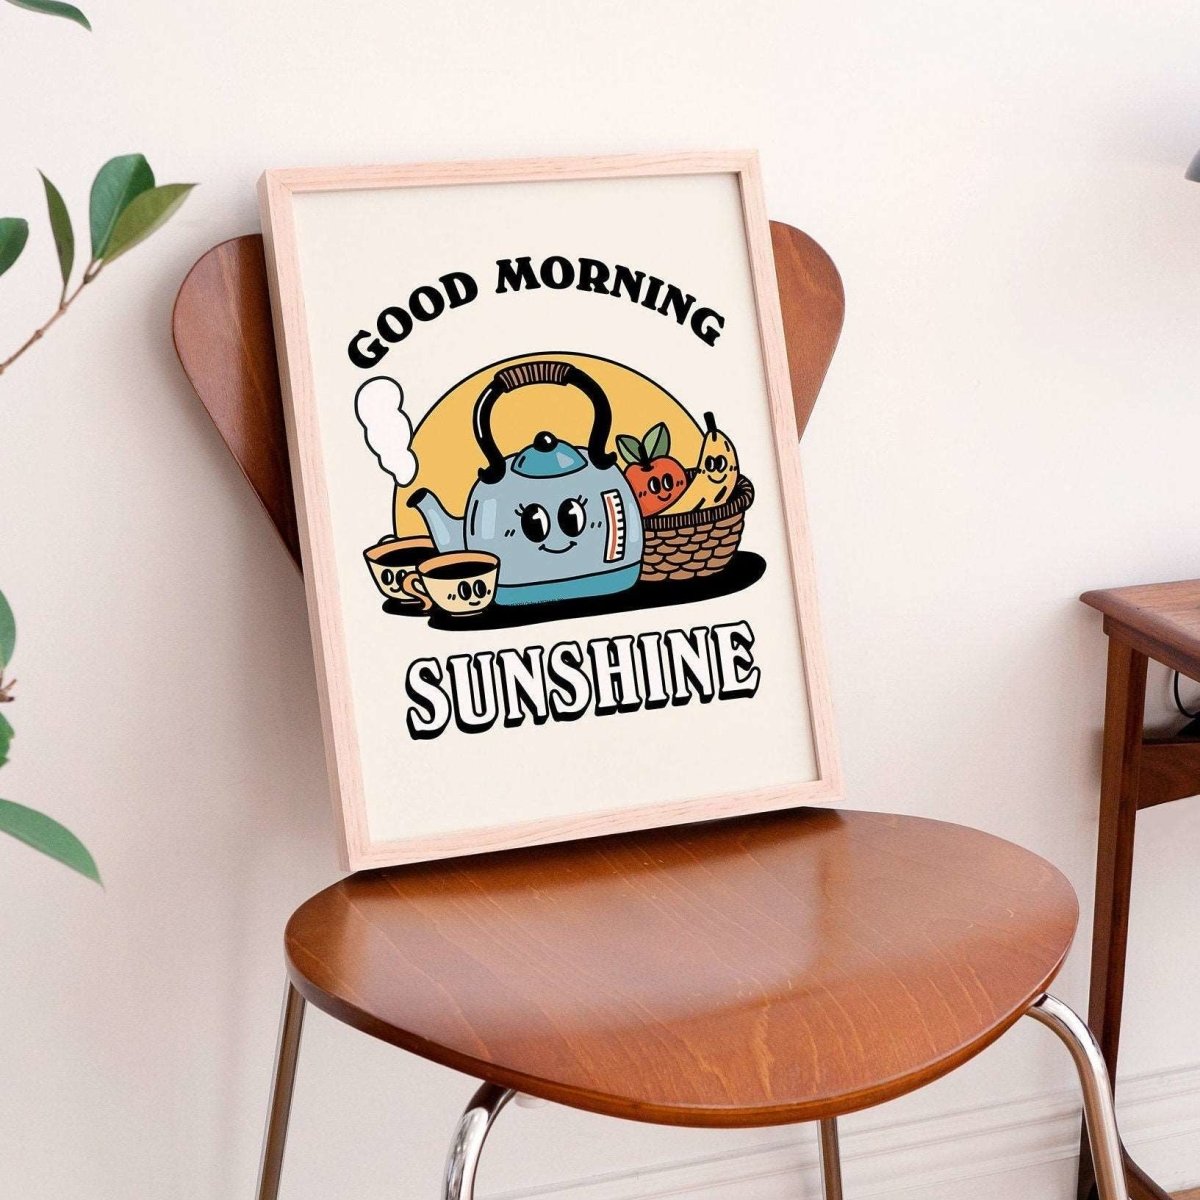 'Good Morning Sunshine' Print - Art Prints - Kinder Planet Company